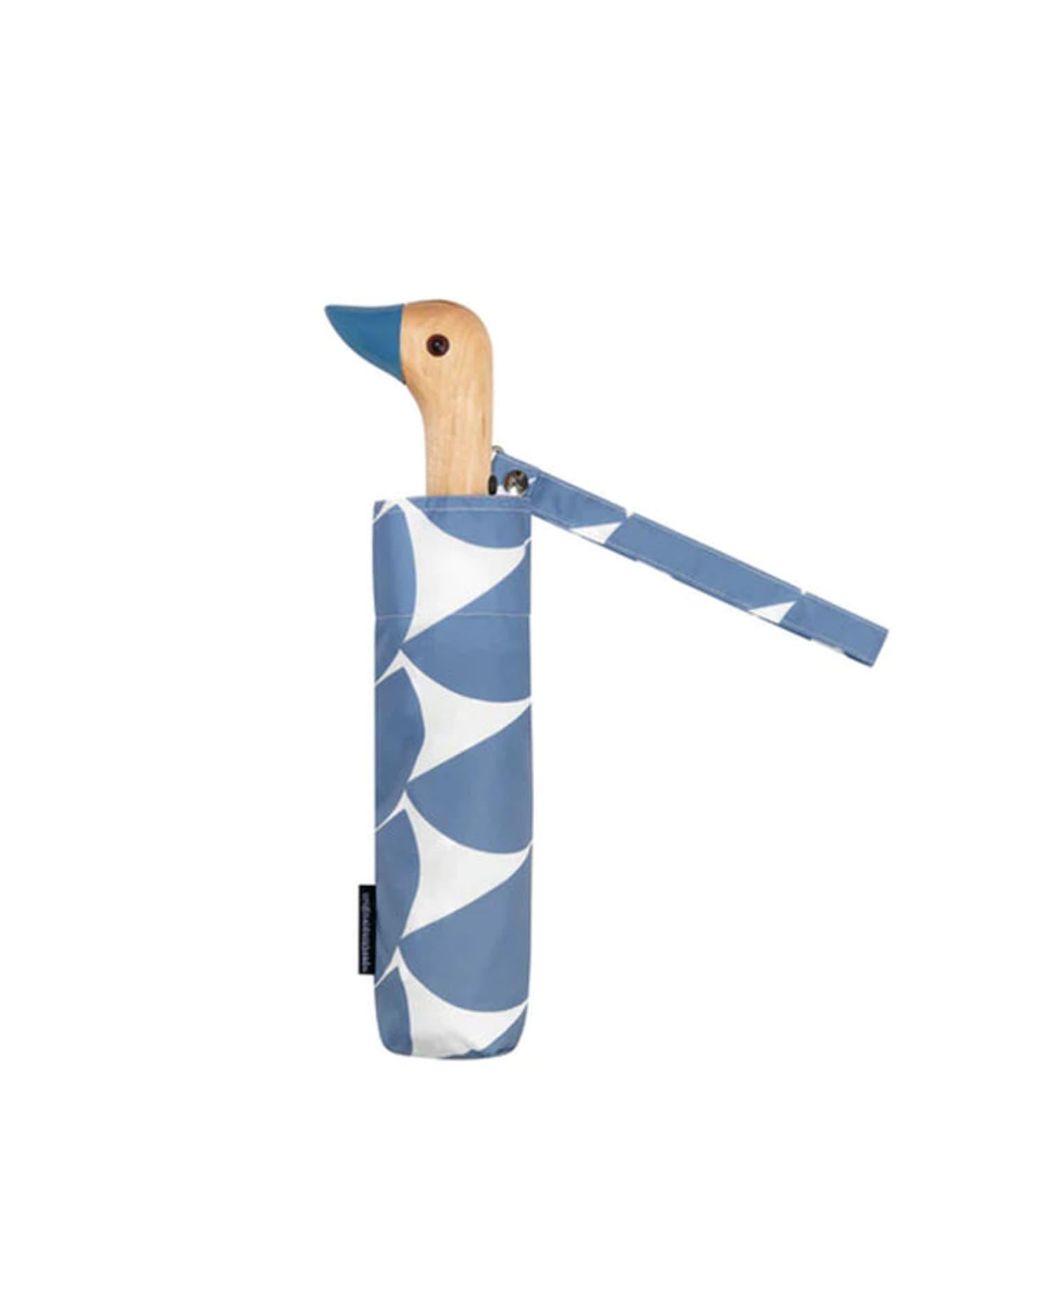 Paraguas cabeza pato Original Duckhead de color Azul | Lyst